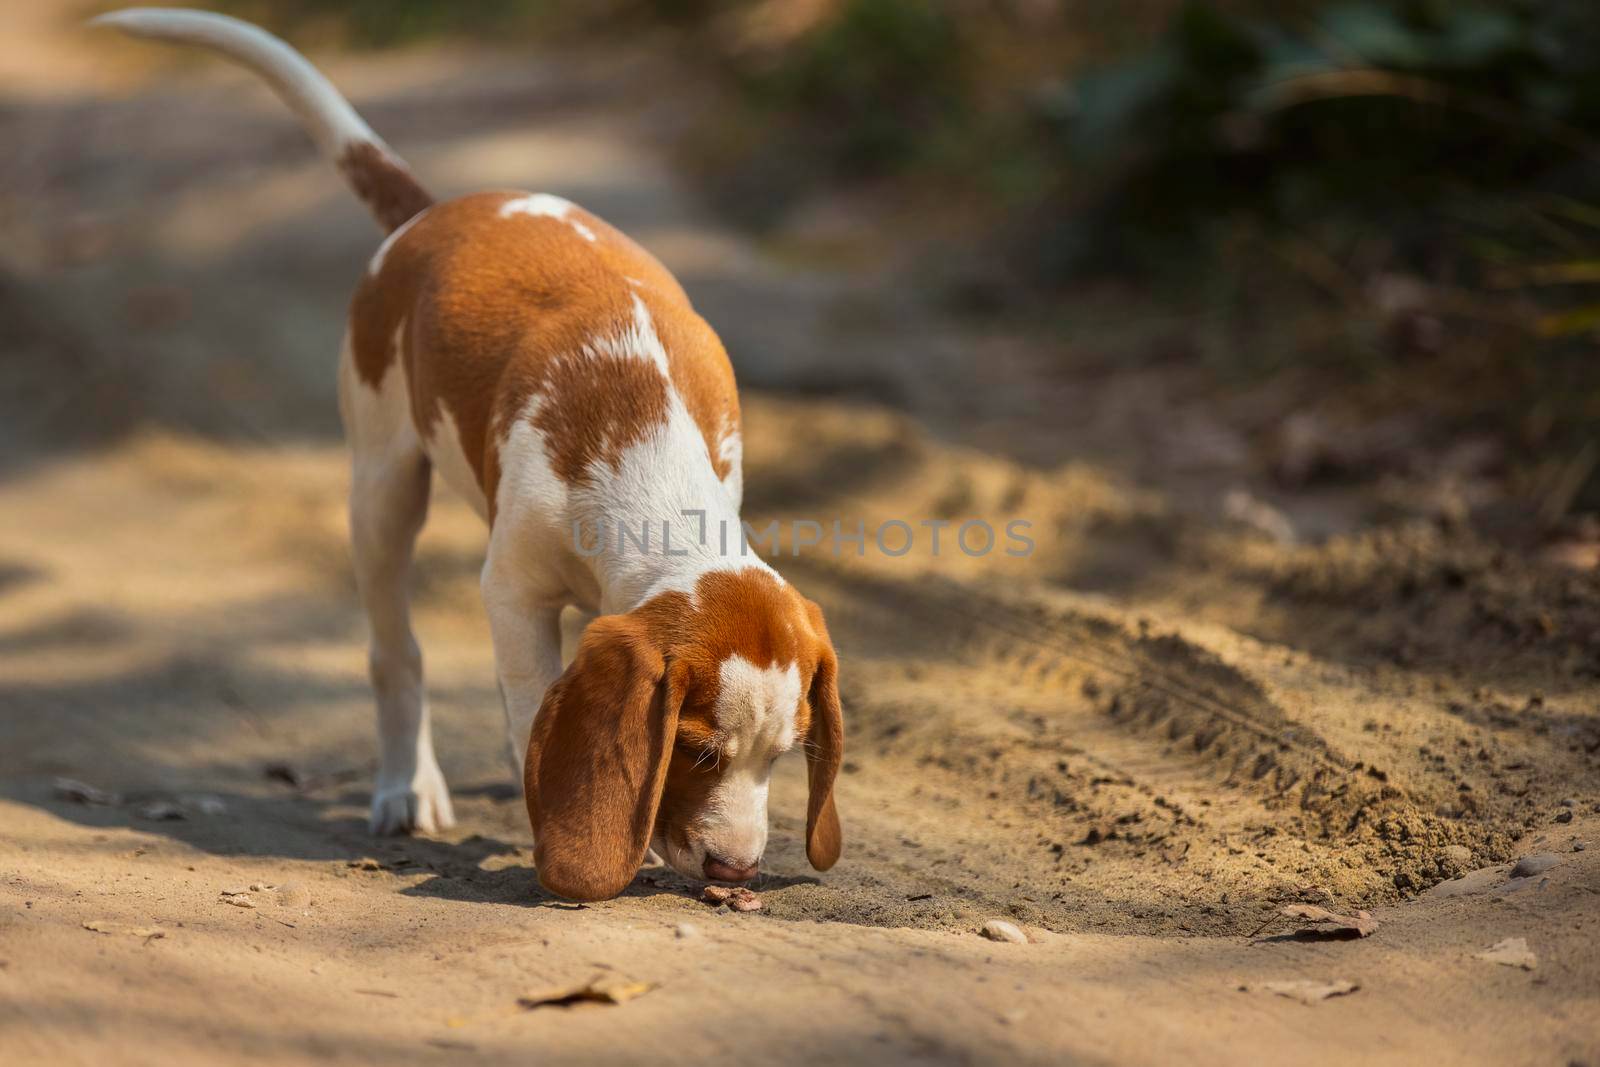 Beagle dog walking on a dirt road